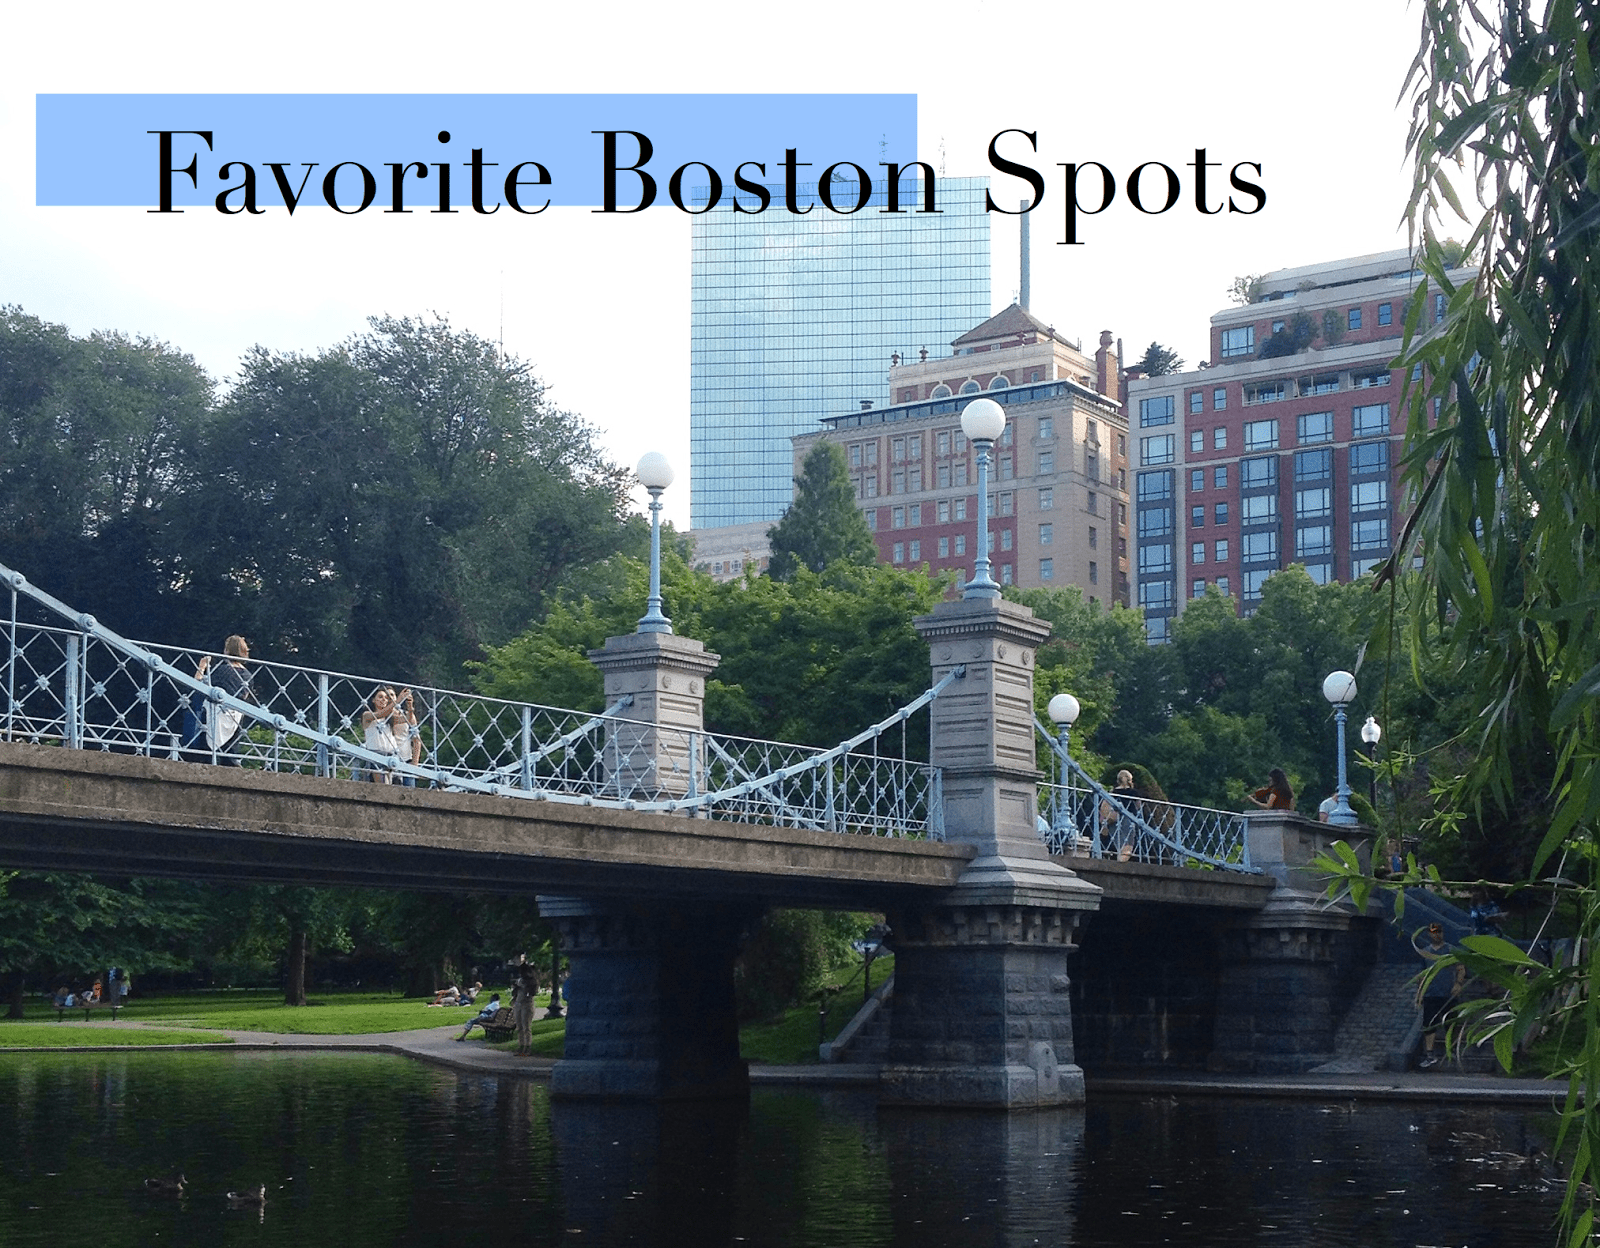 Favorite Boston Spots: Where I Love to Go in Boston